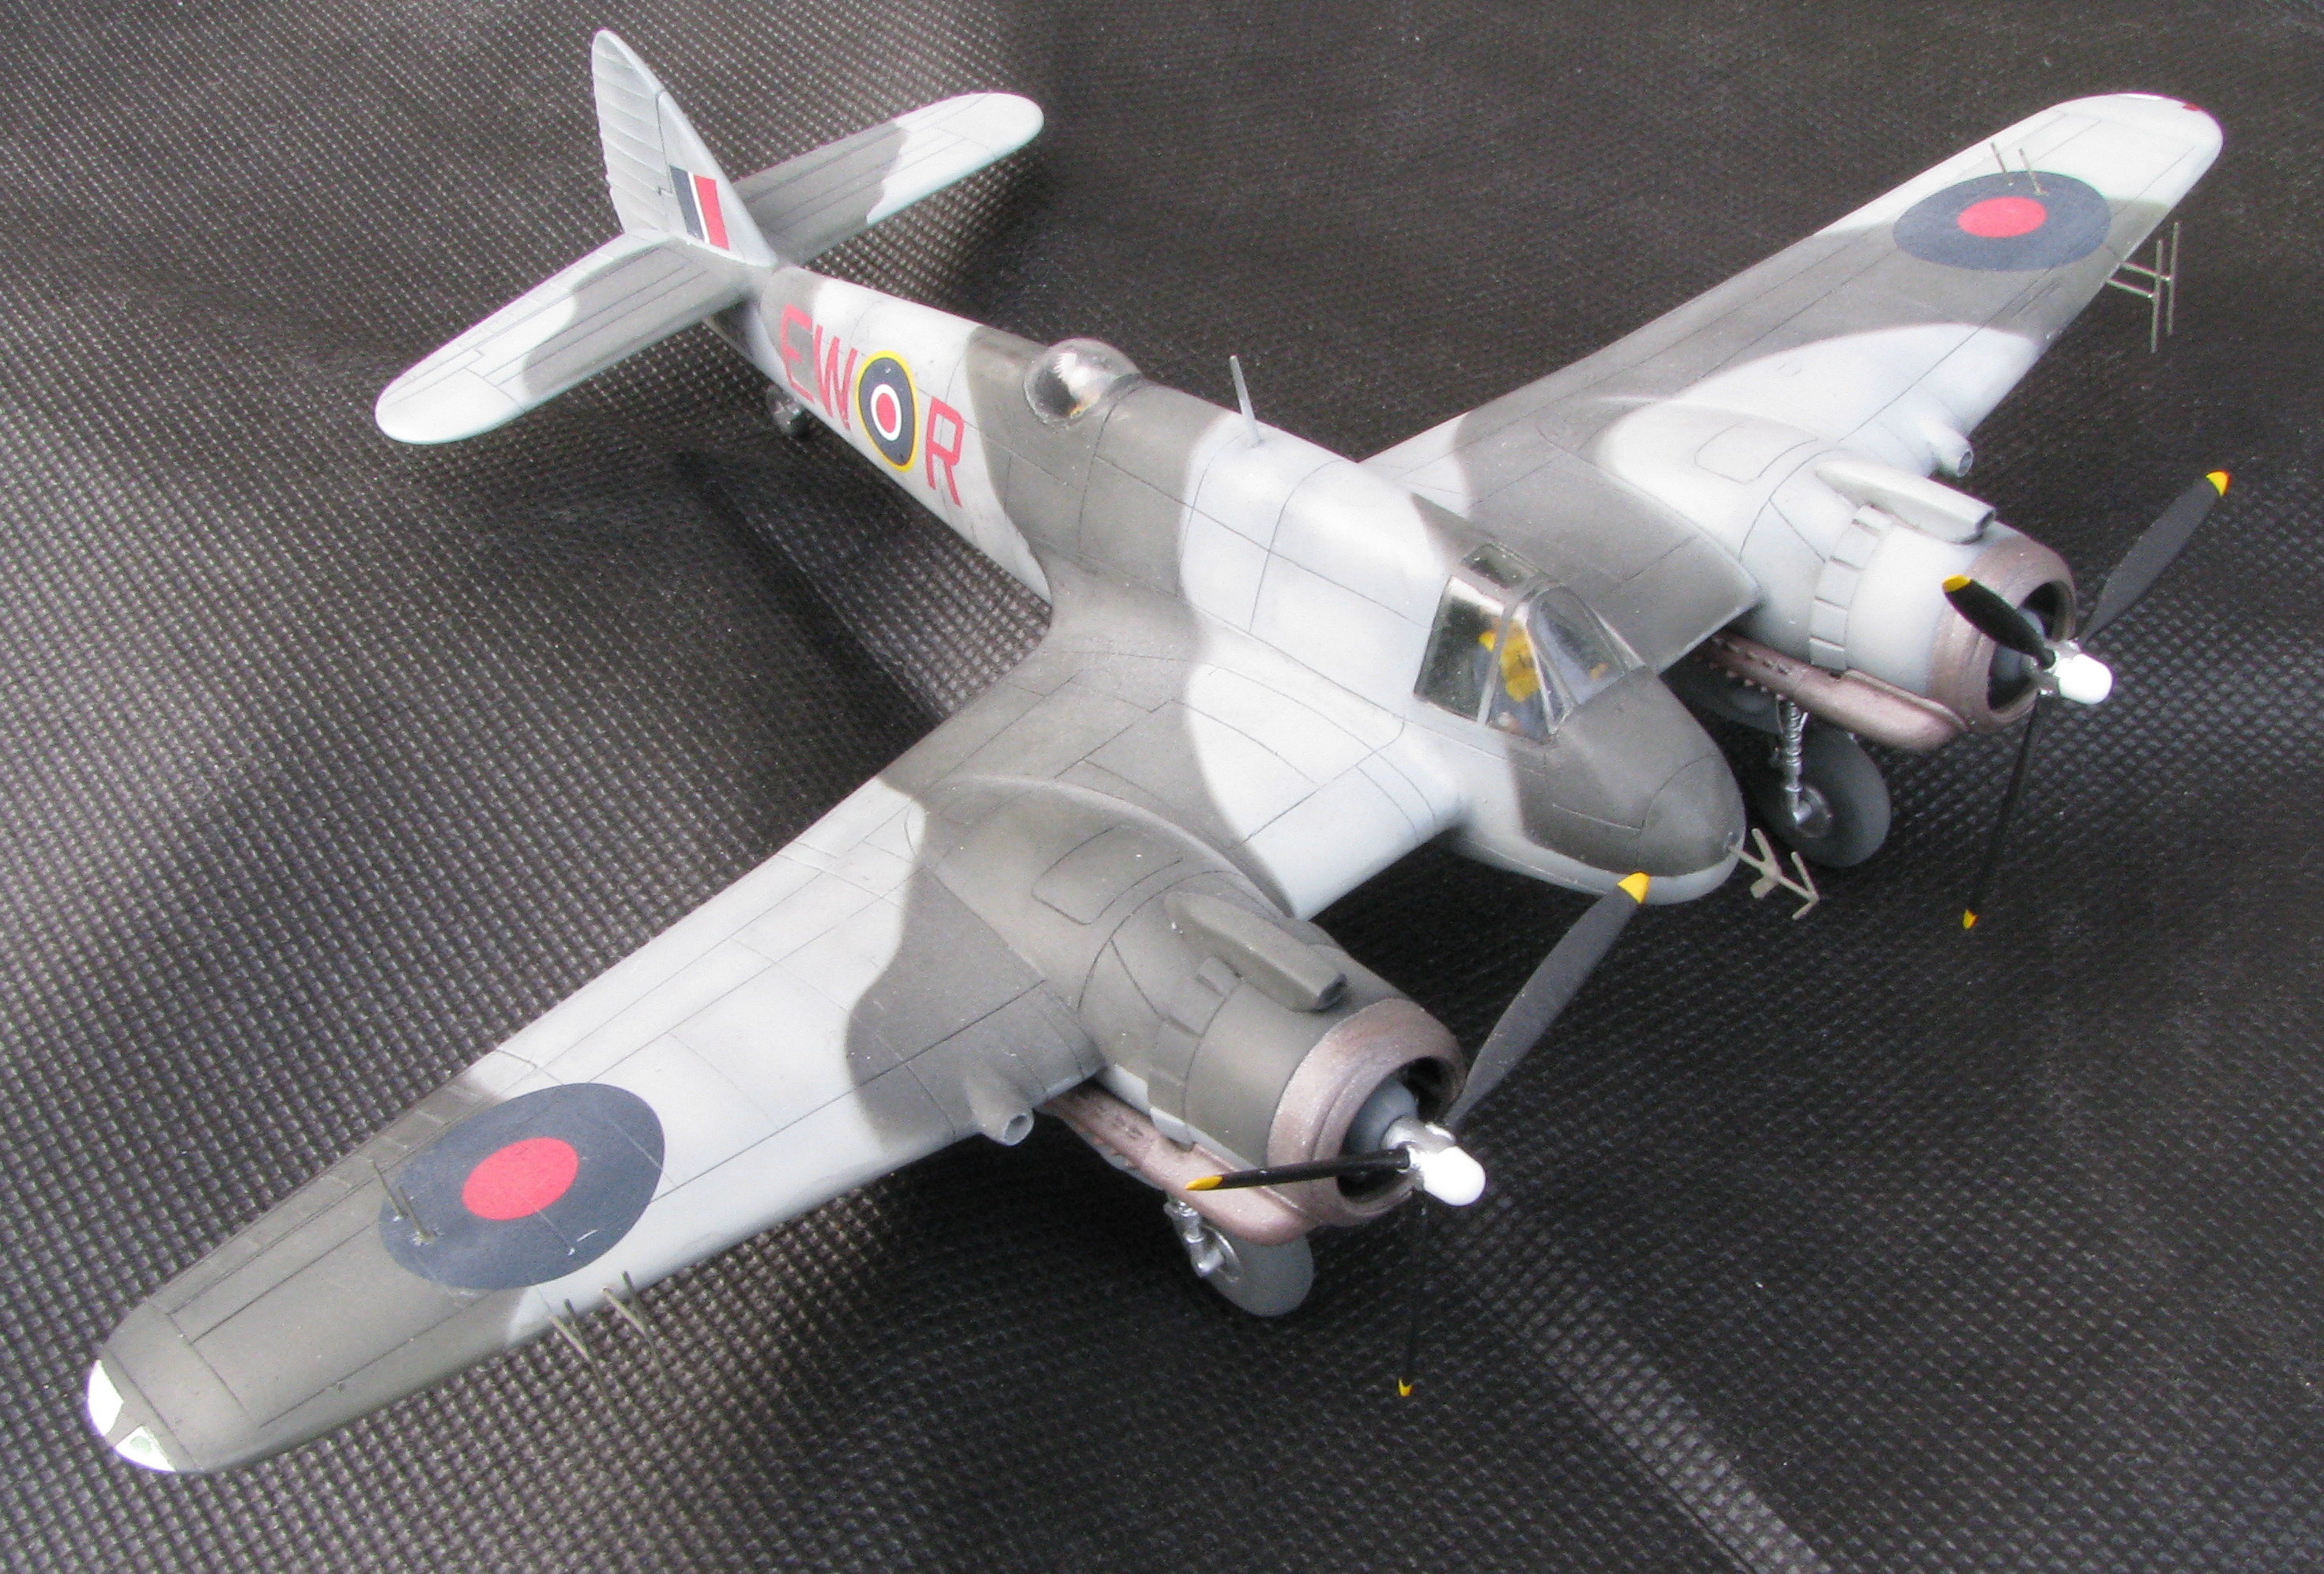 1:72 Novo Beaufighter VIF by Pawel